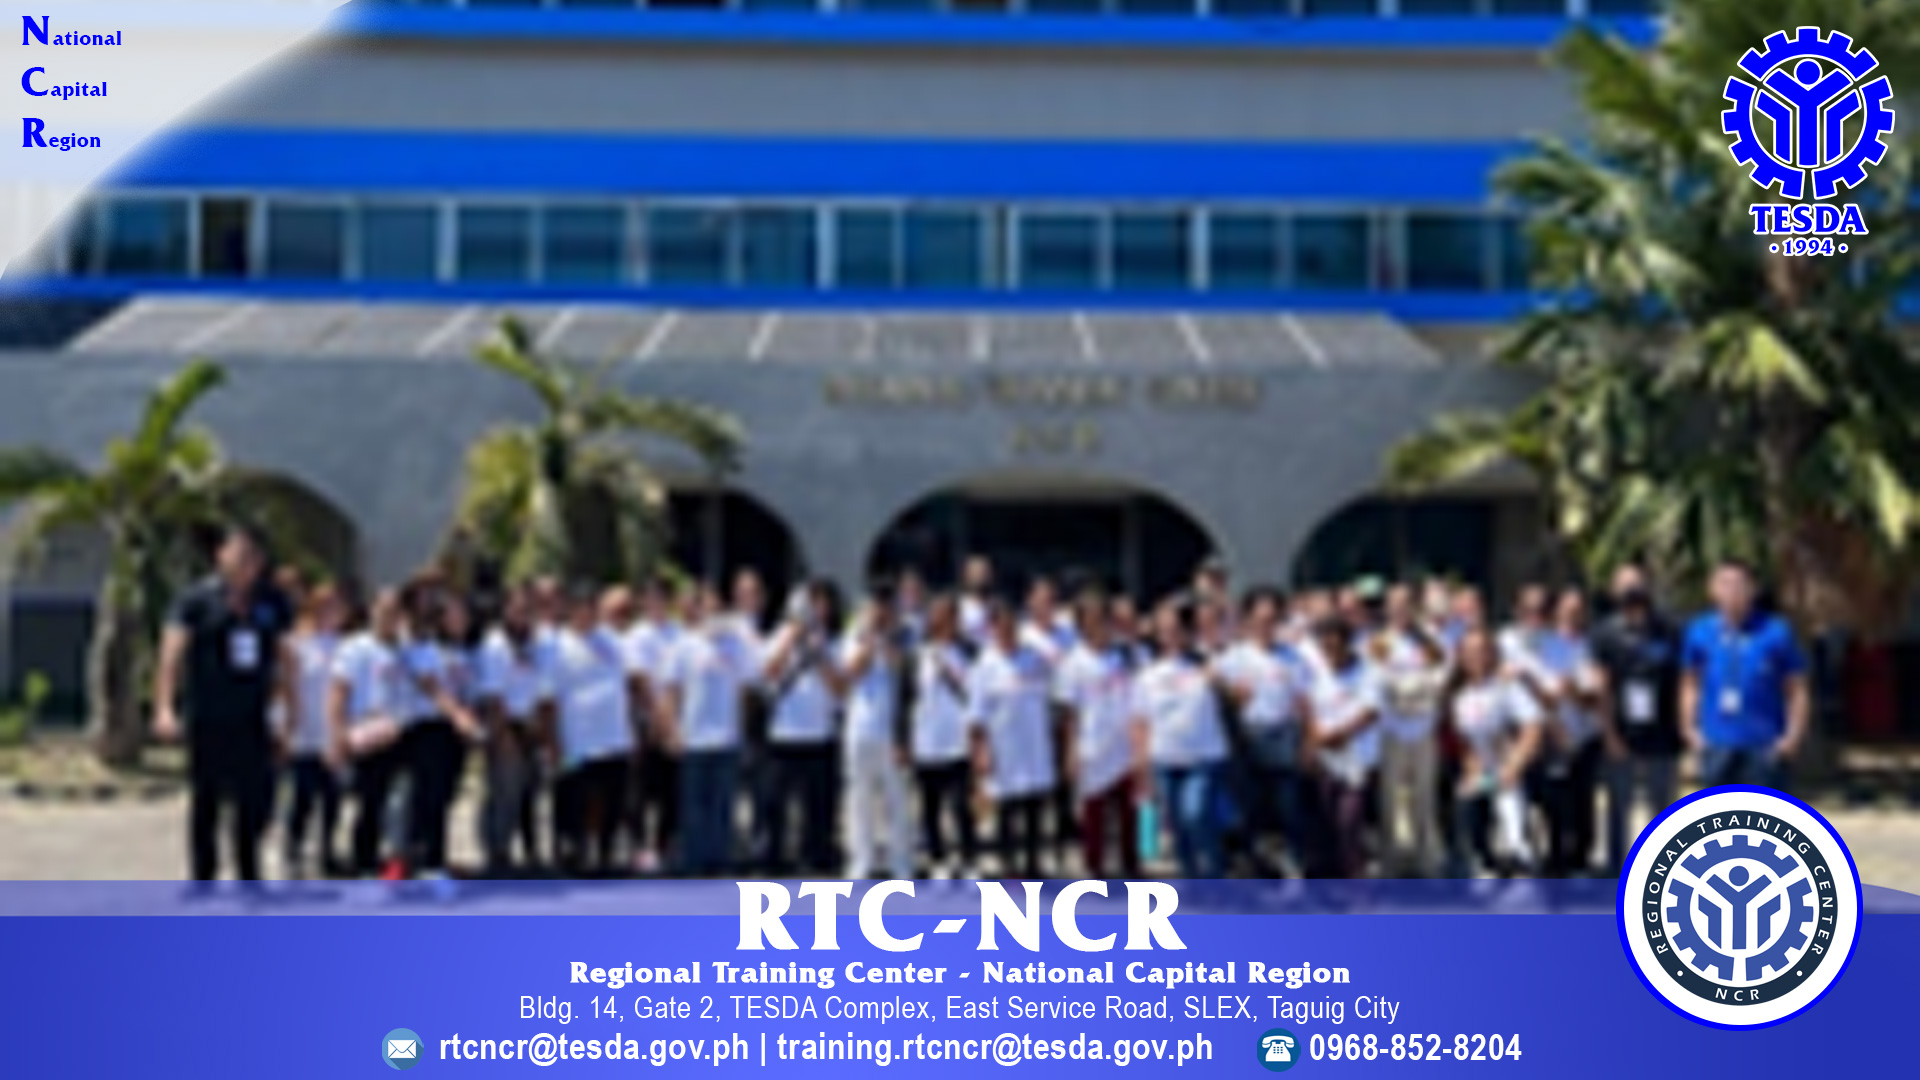 iStar graduates visit RTC-NCR